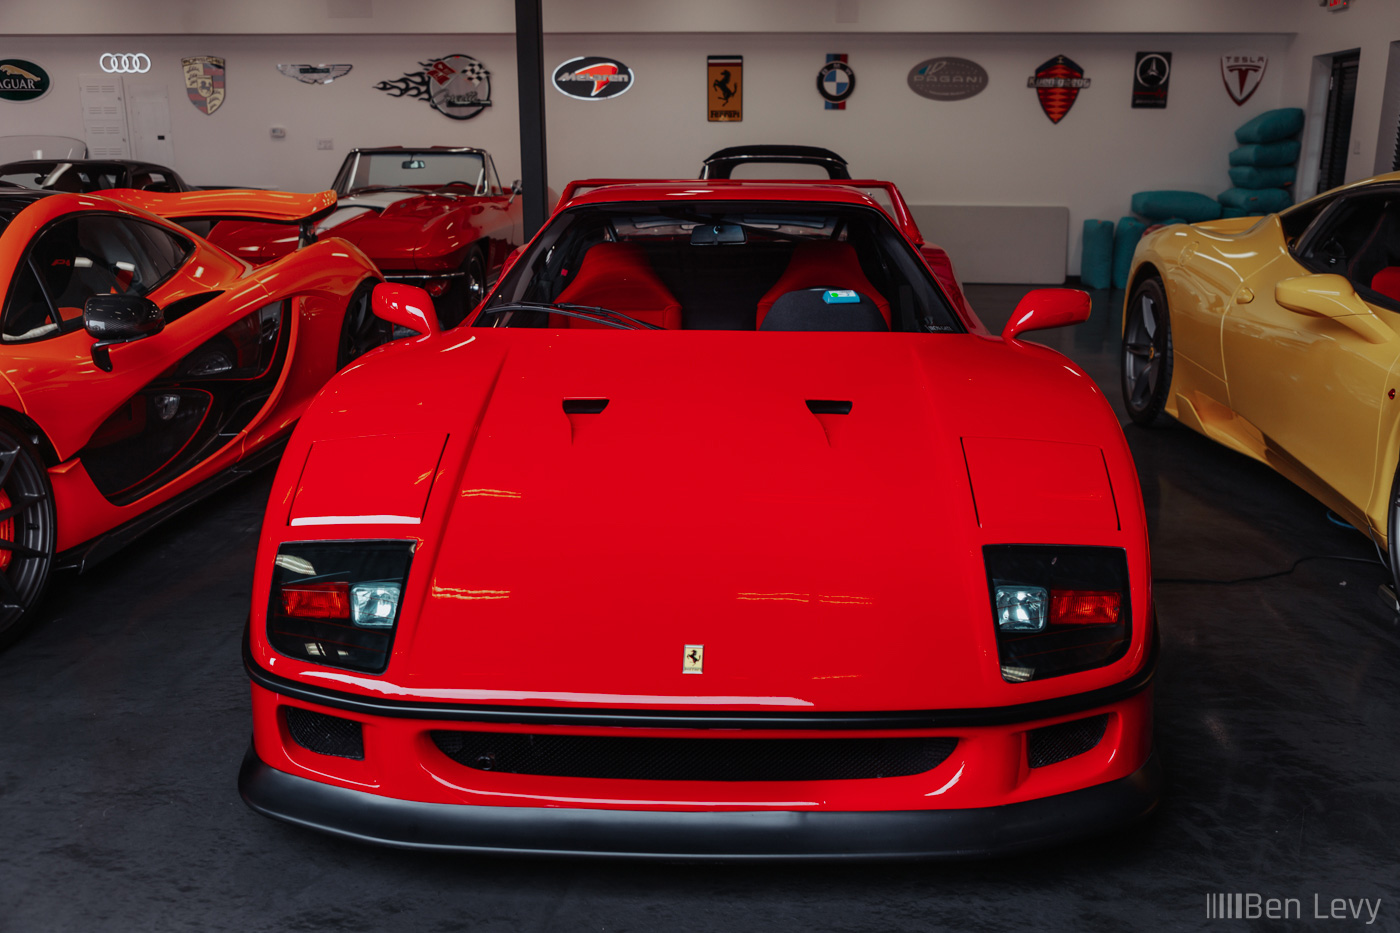 Red Ferrari F40 at a Private Garage in Naperville